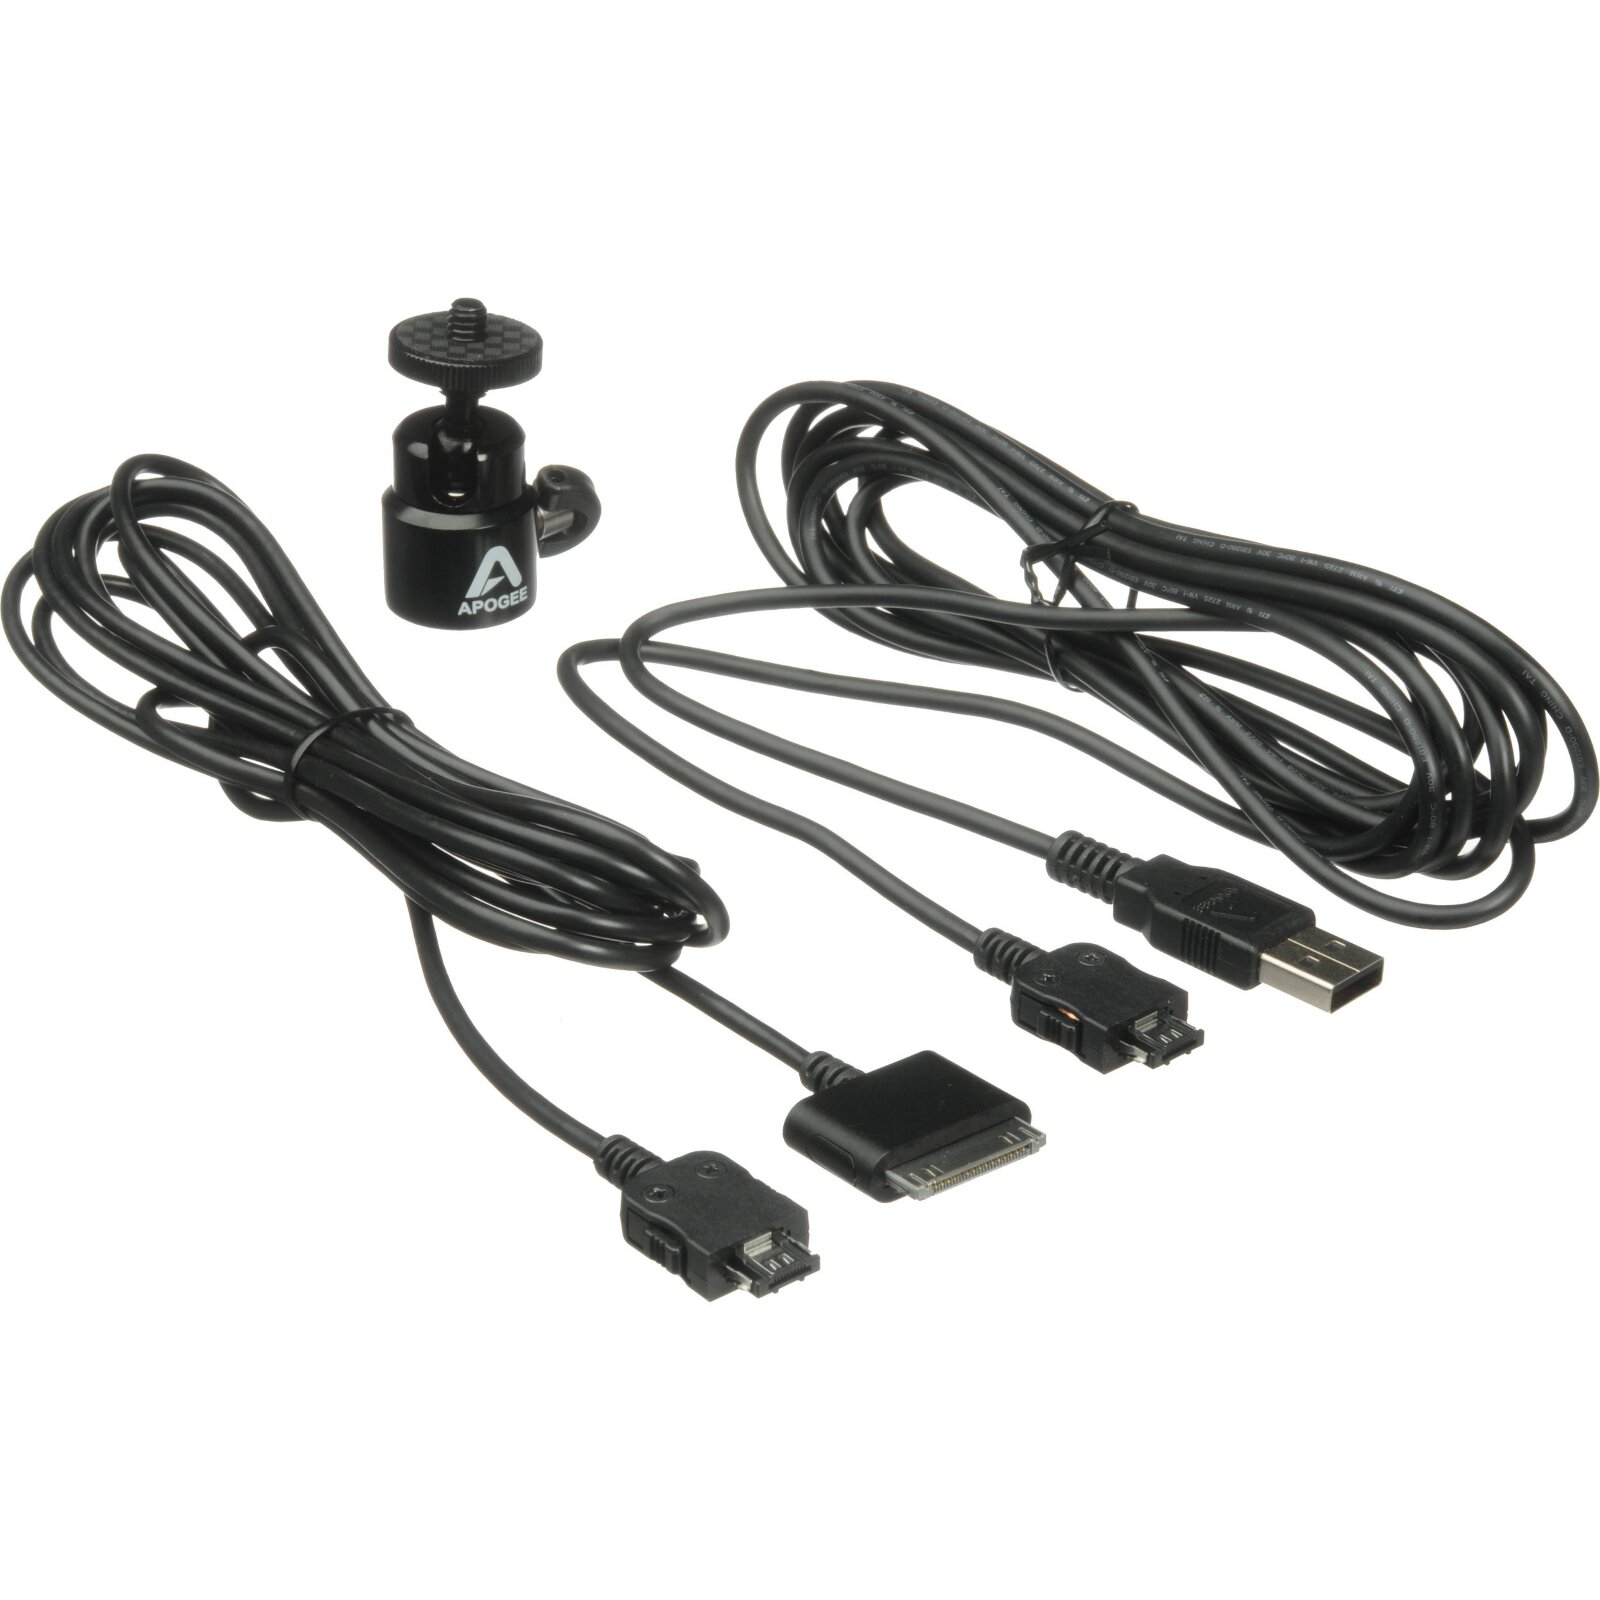 Apogee Electronics MiC-Kabel & Adapter-Kit : photo 1